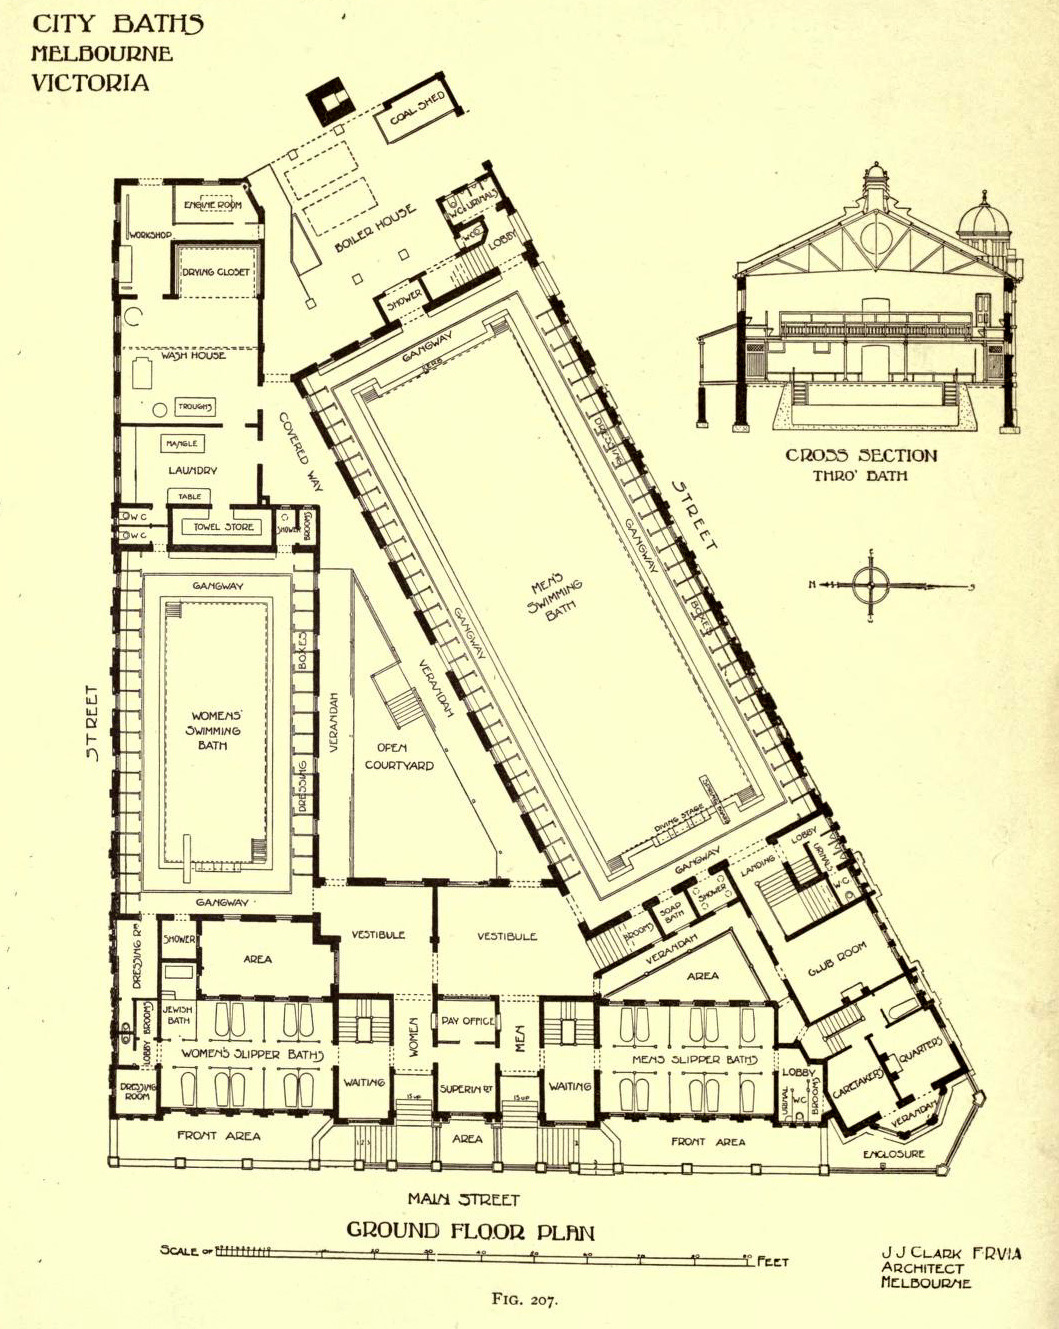 Plan of the City Baths, Melbourne